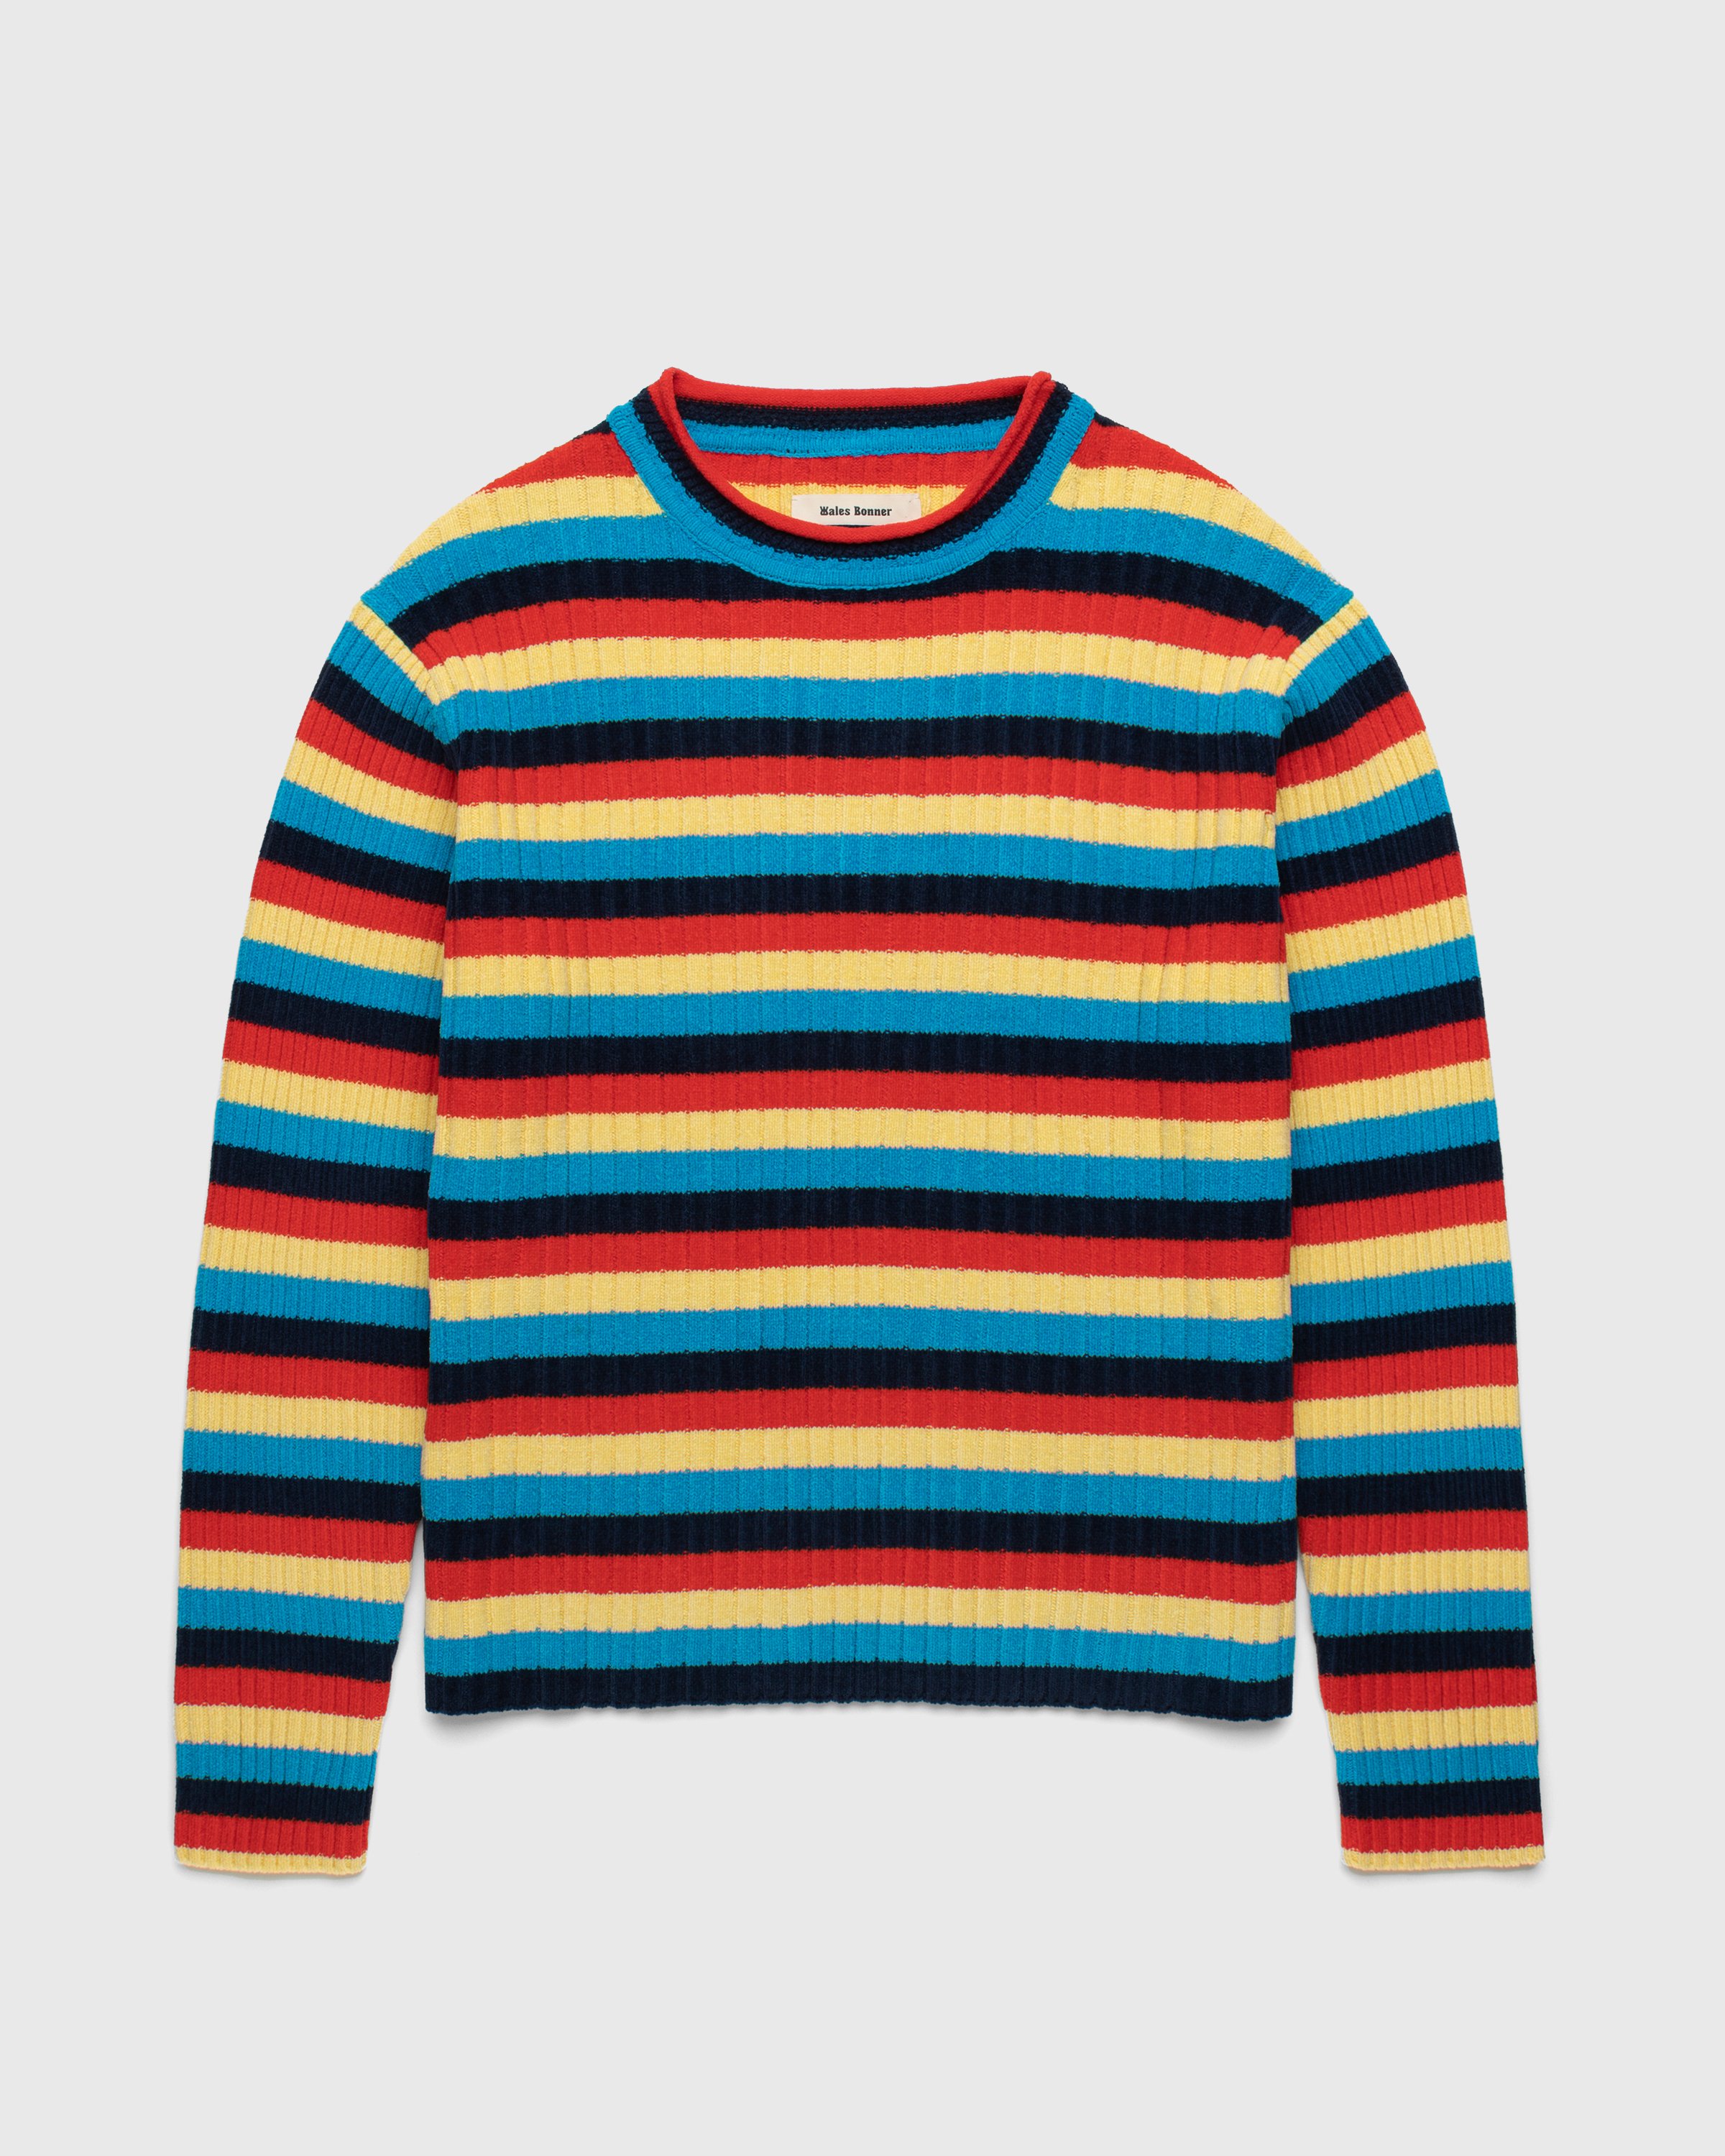 Wales Bonner - Choir Sweater Multi - Clothing - Multi - Image 1